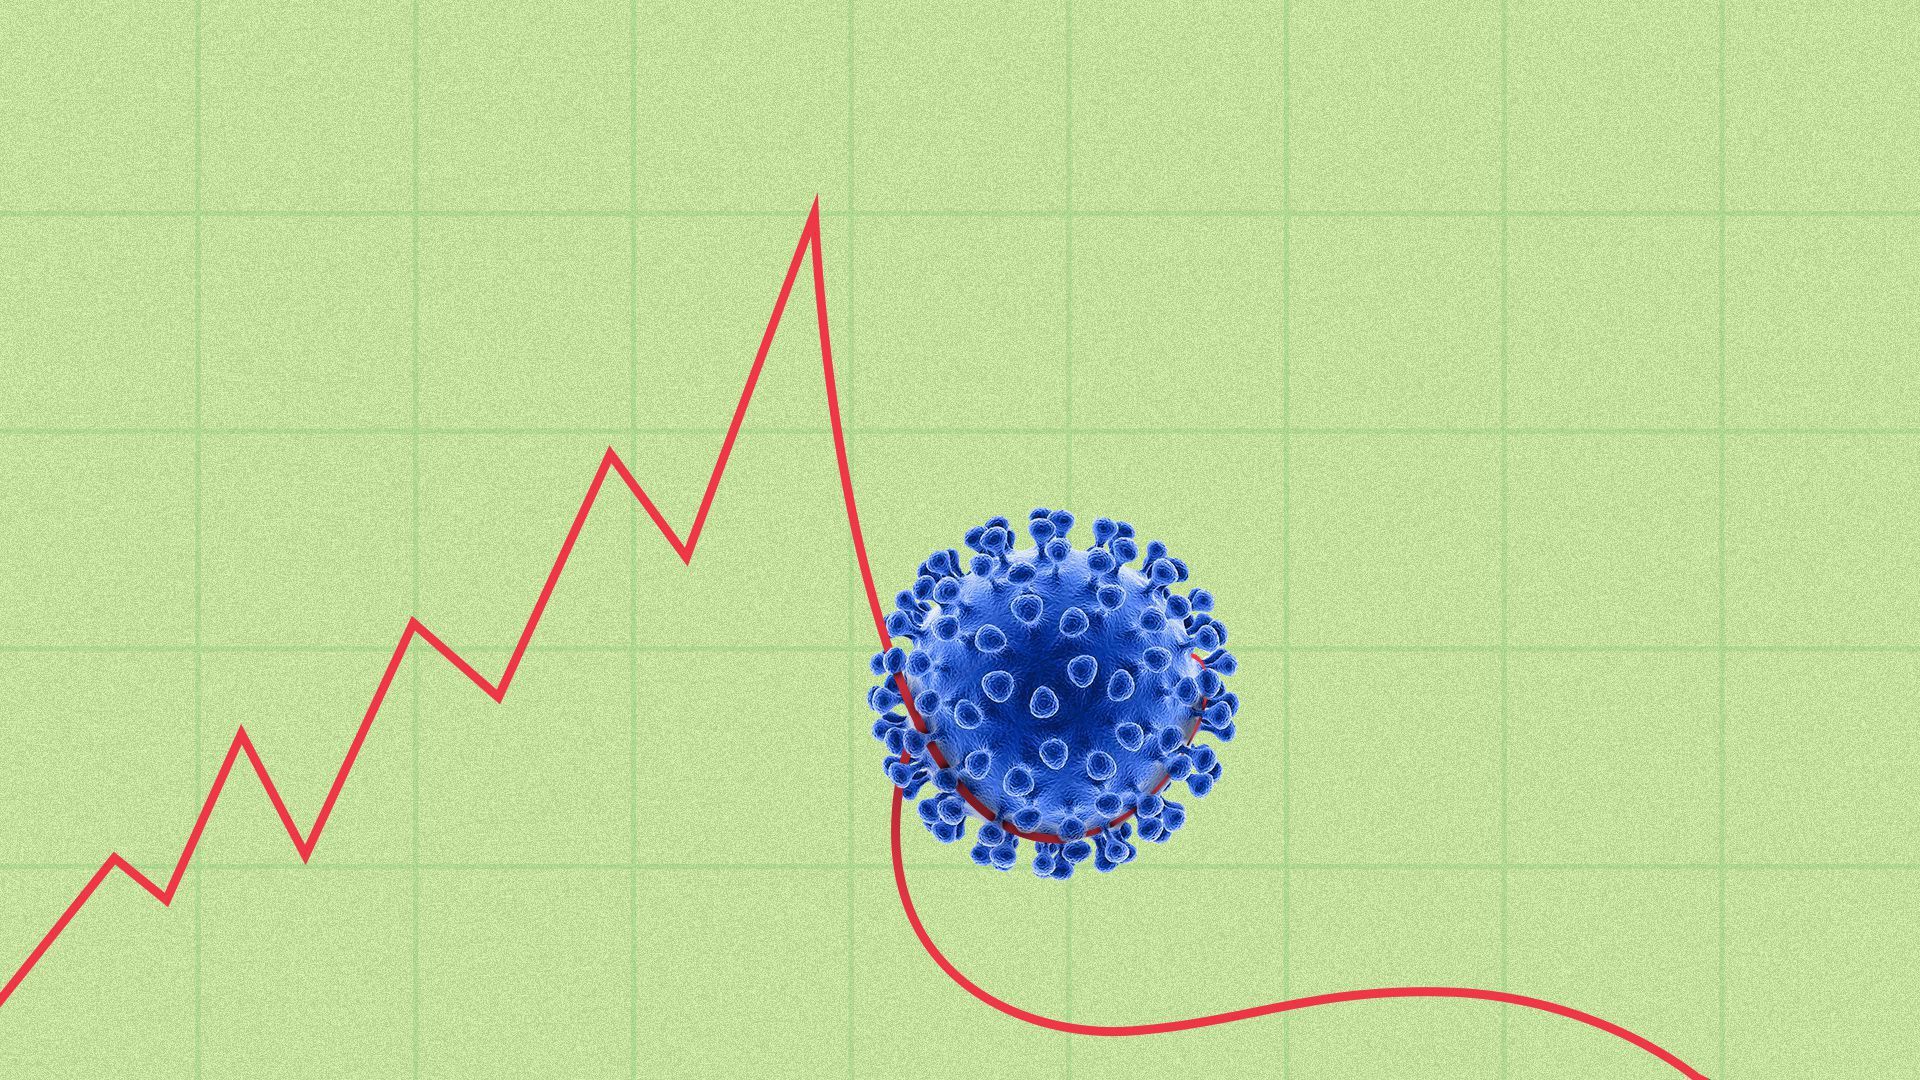 Illustration of the coronavirus dragging down the stock market